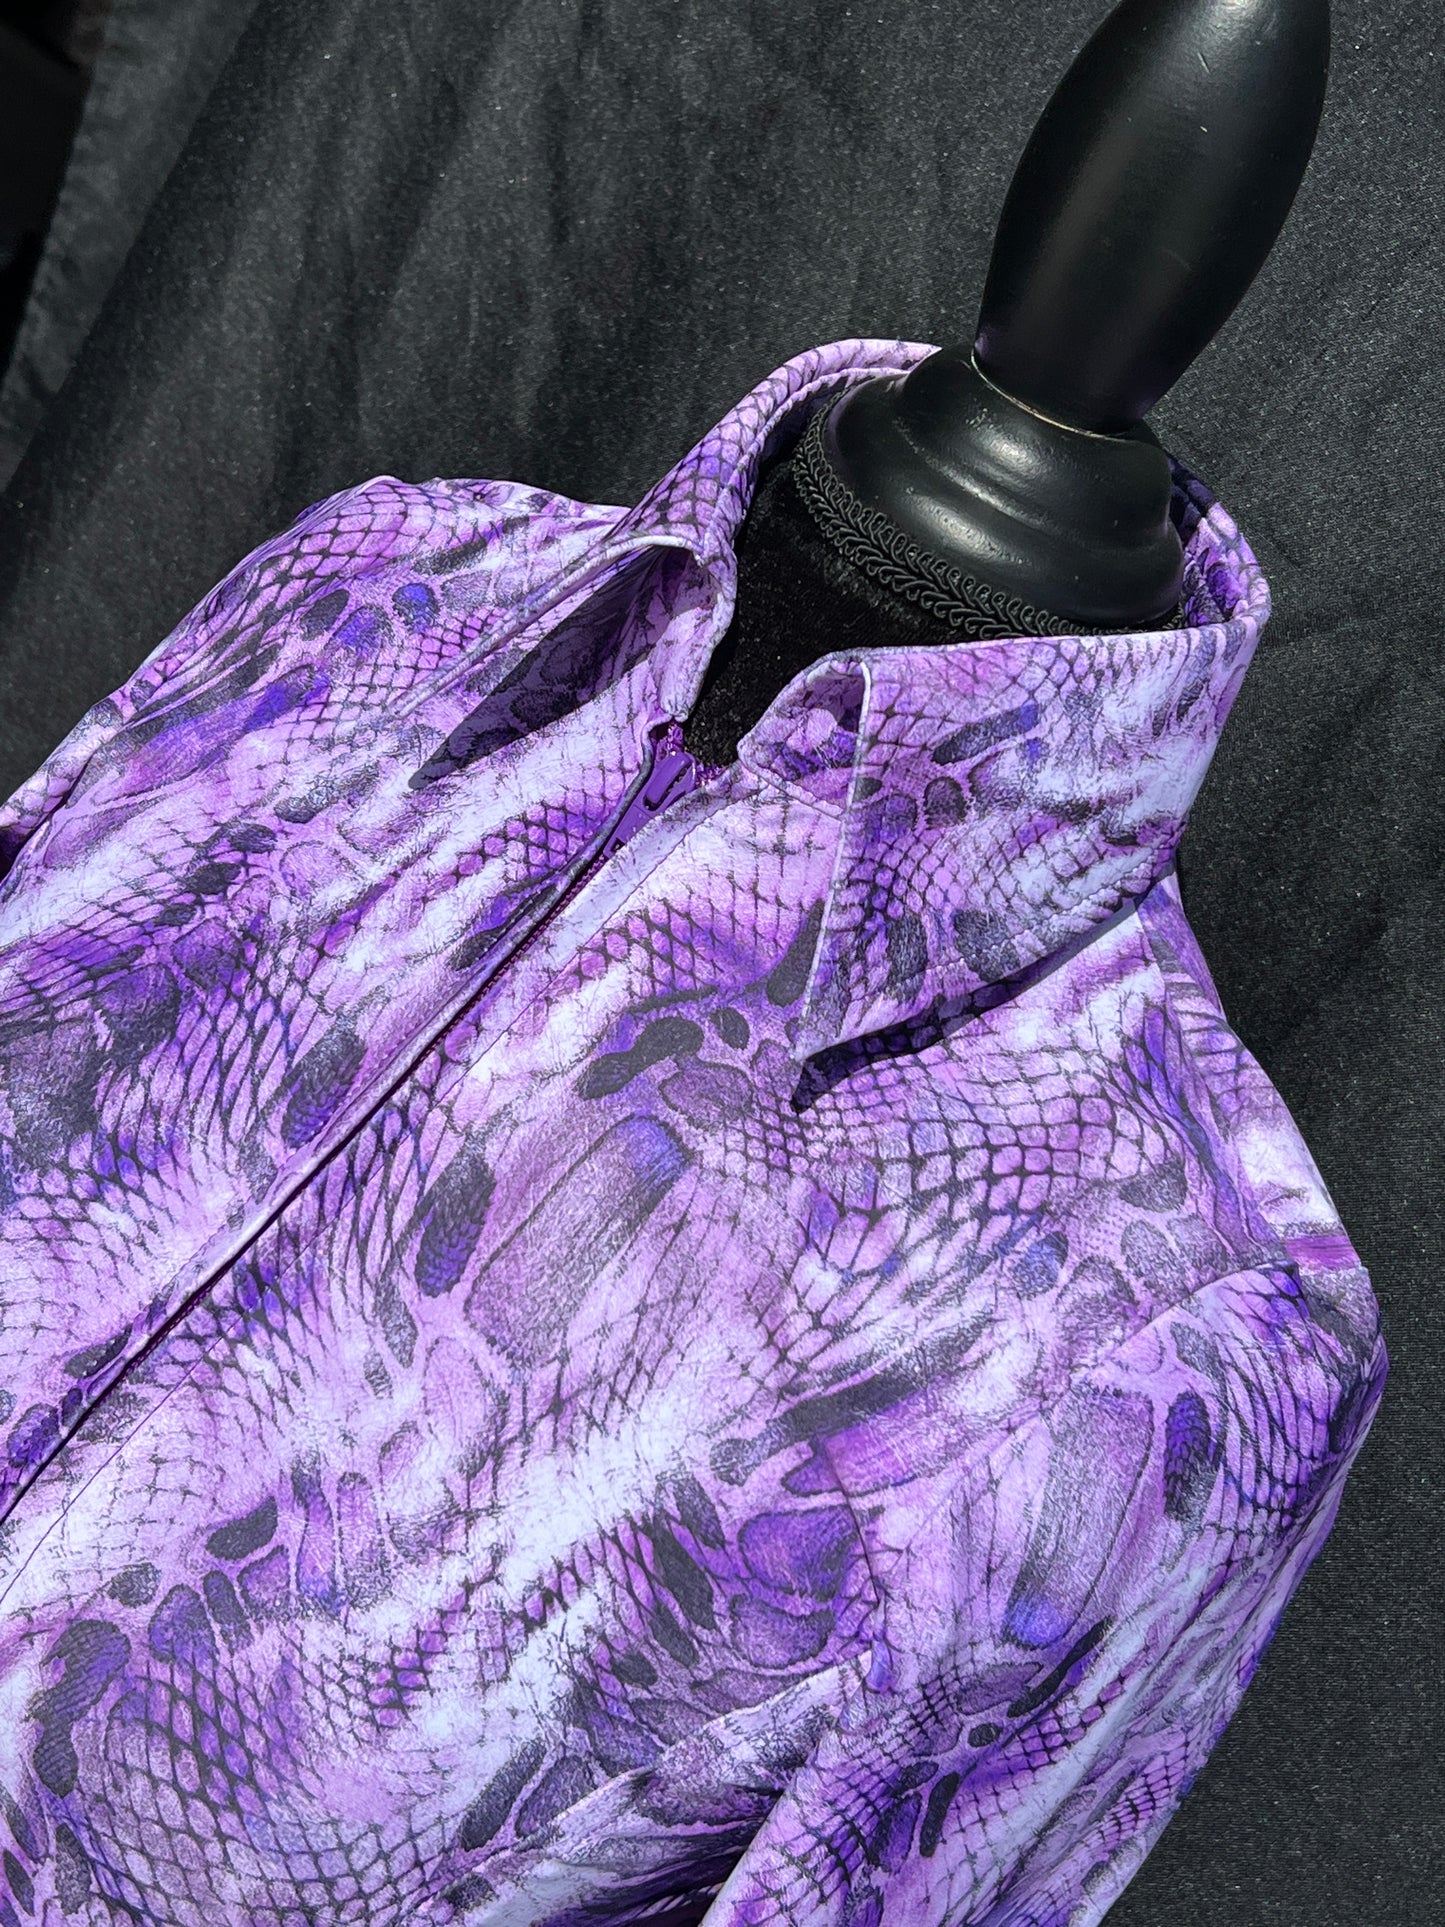 Purple Snake Print Light Weight Fitted Shirt